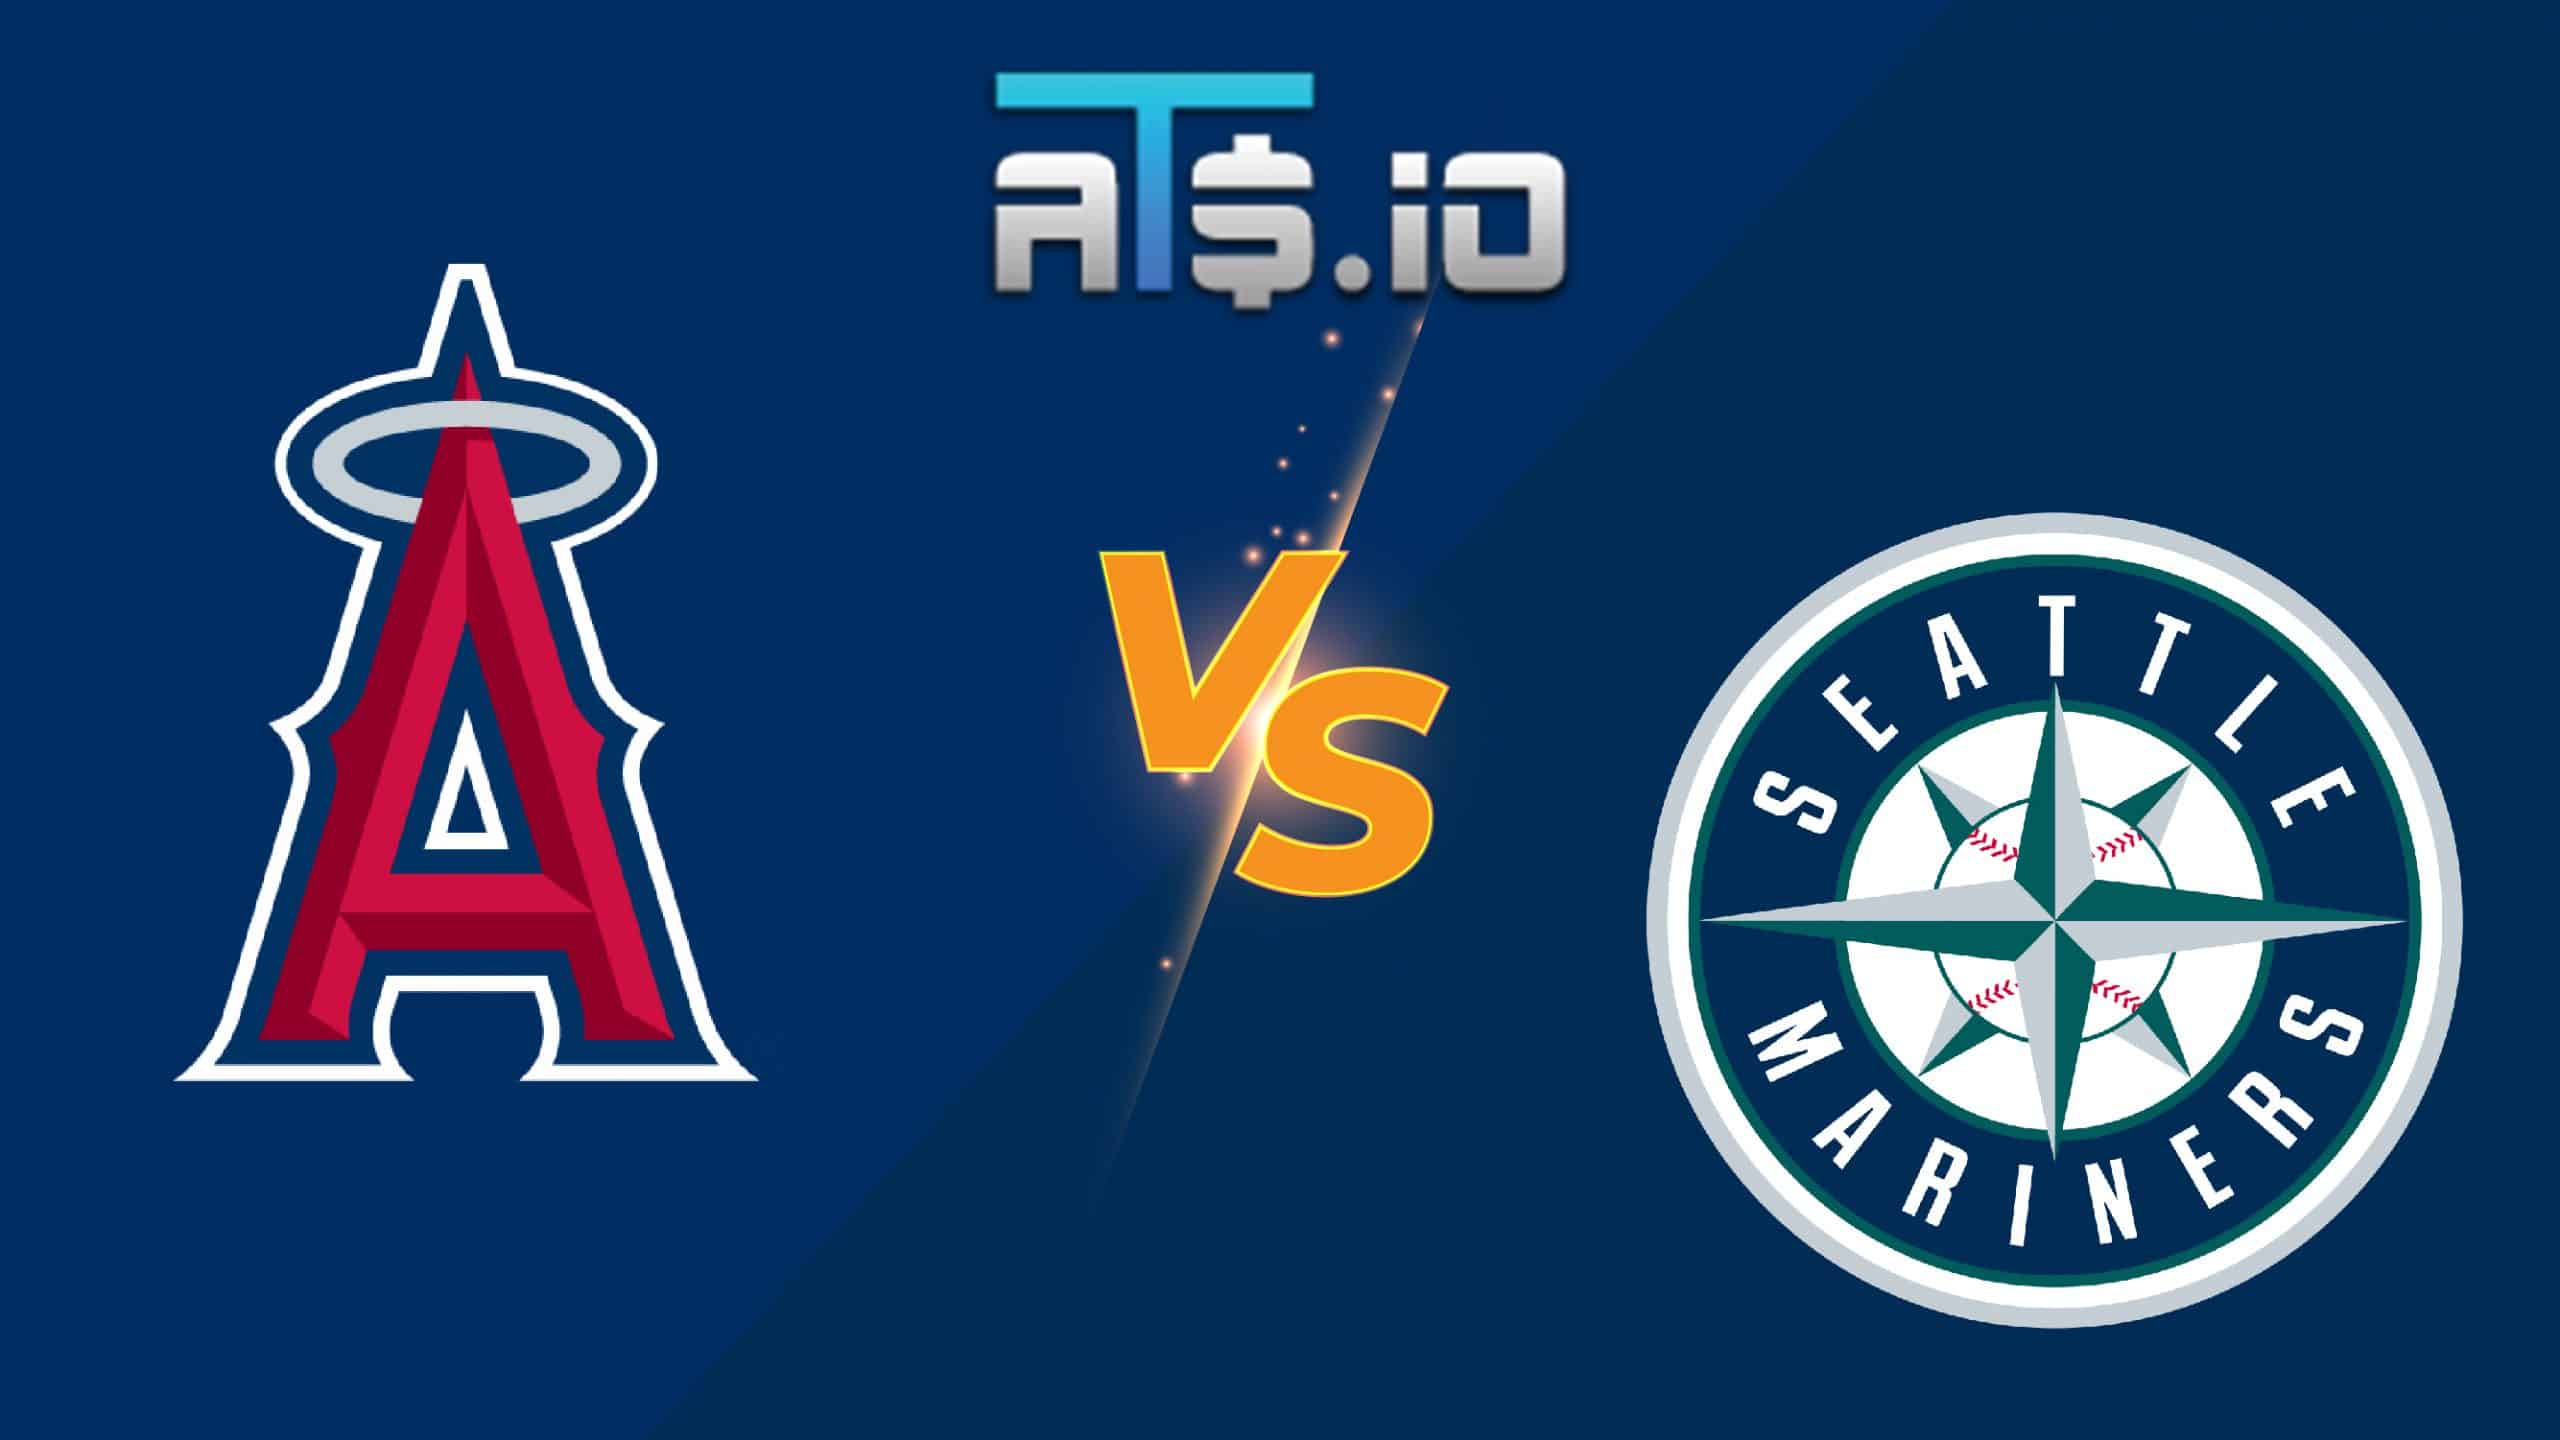 Los Angeles Angels vs Seattle Mariners Prediction & Free MLB Pick 06/16/22